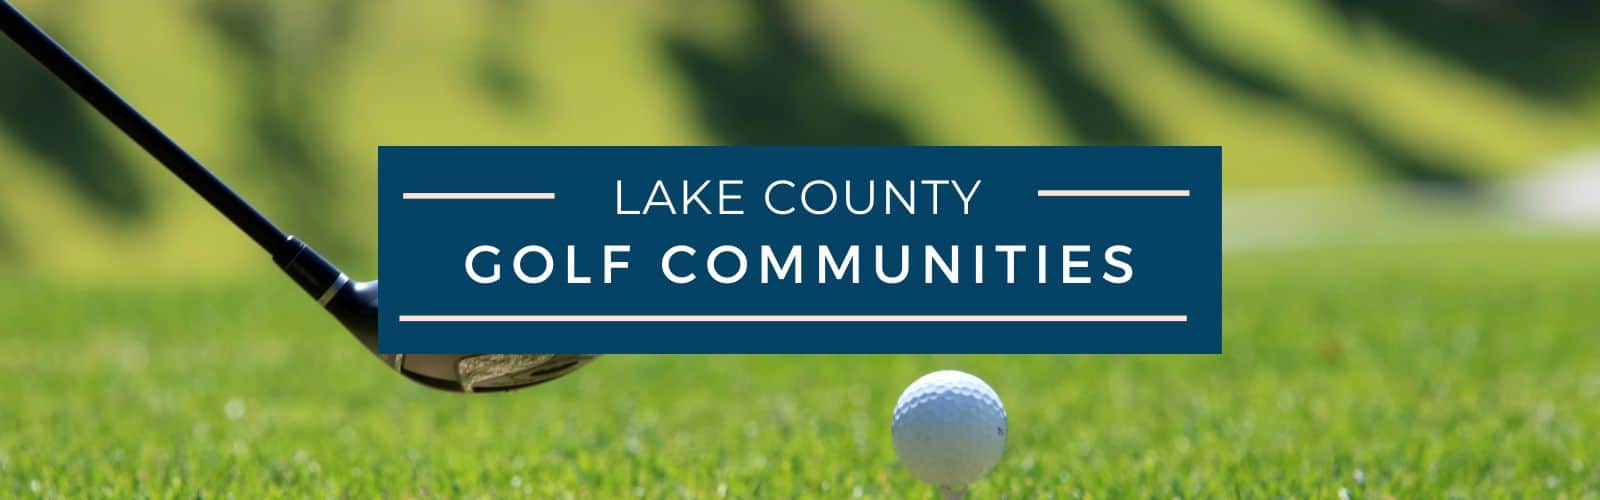 Lake County Golf Communities